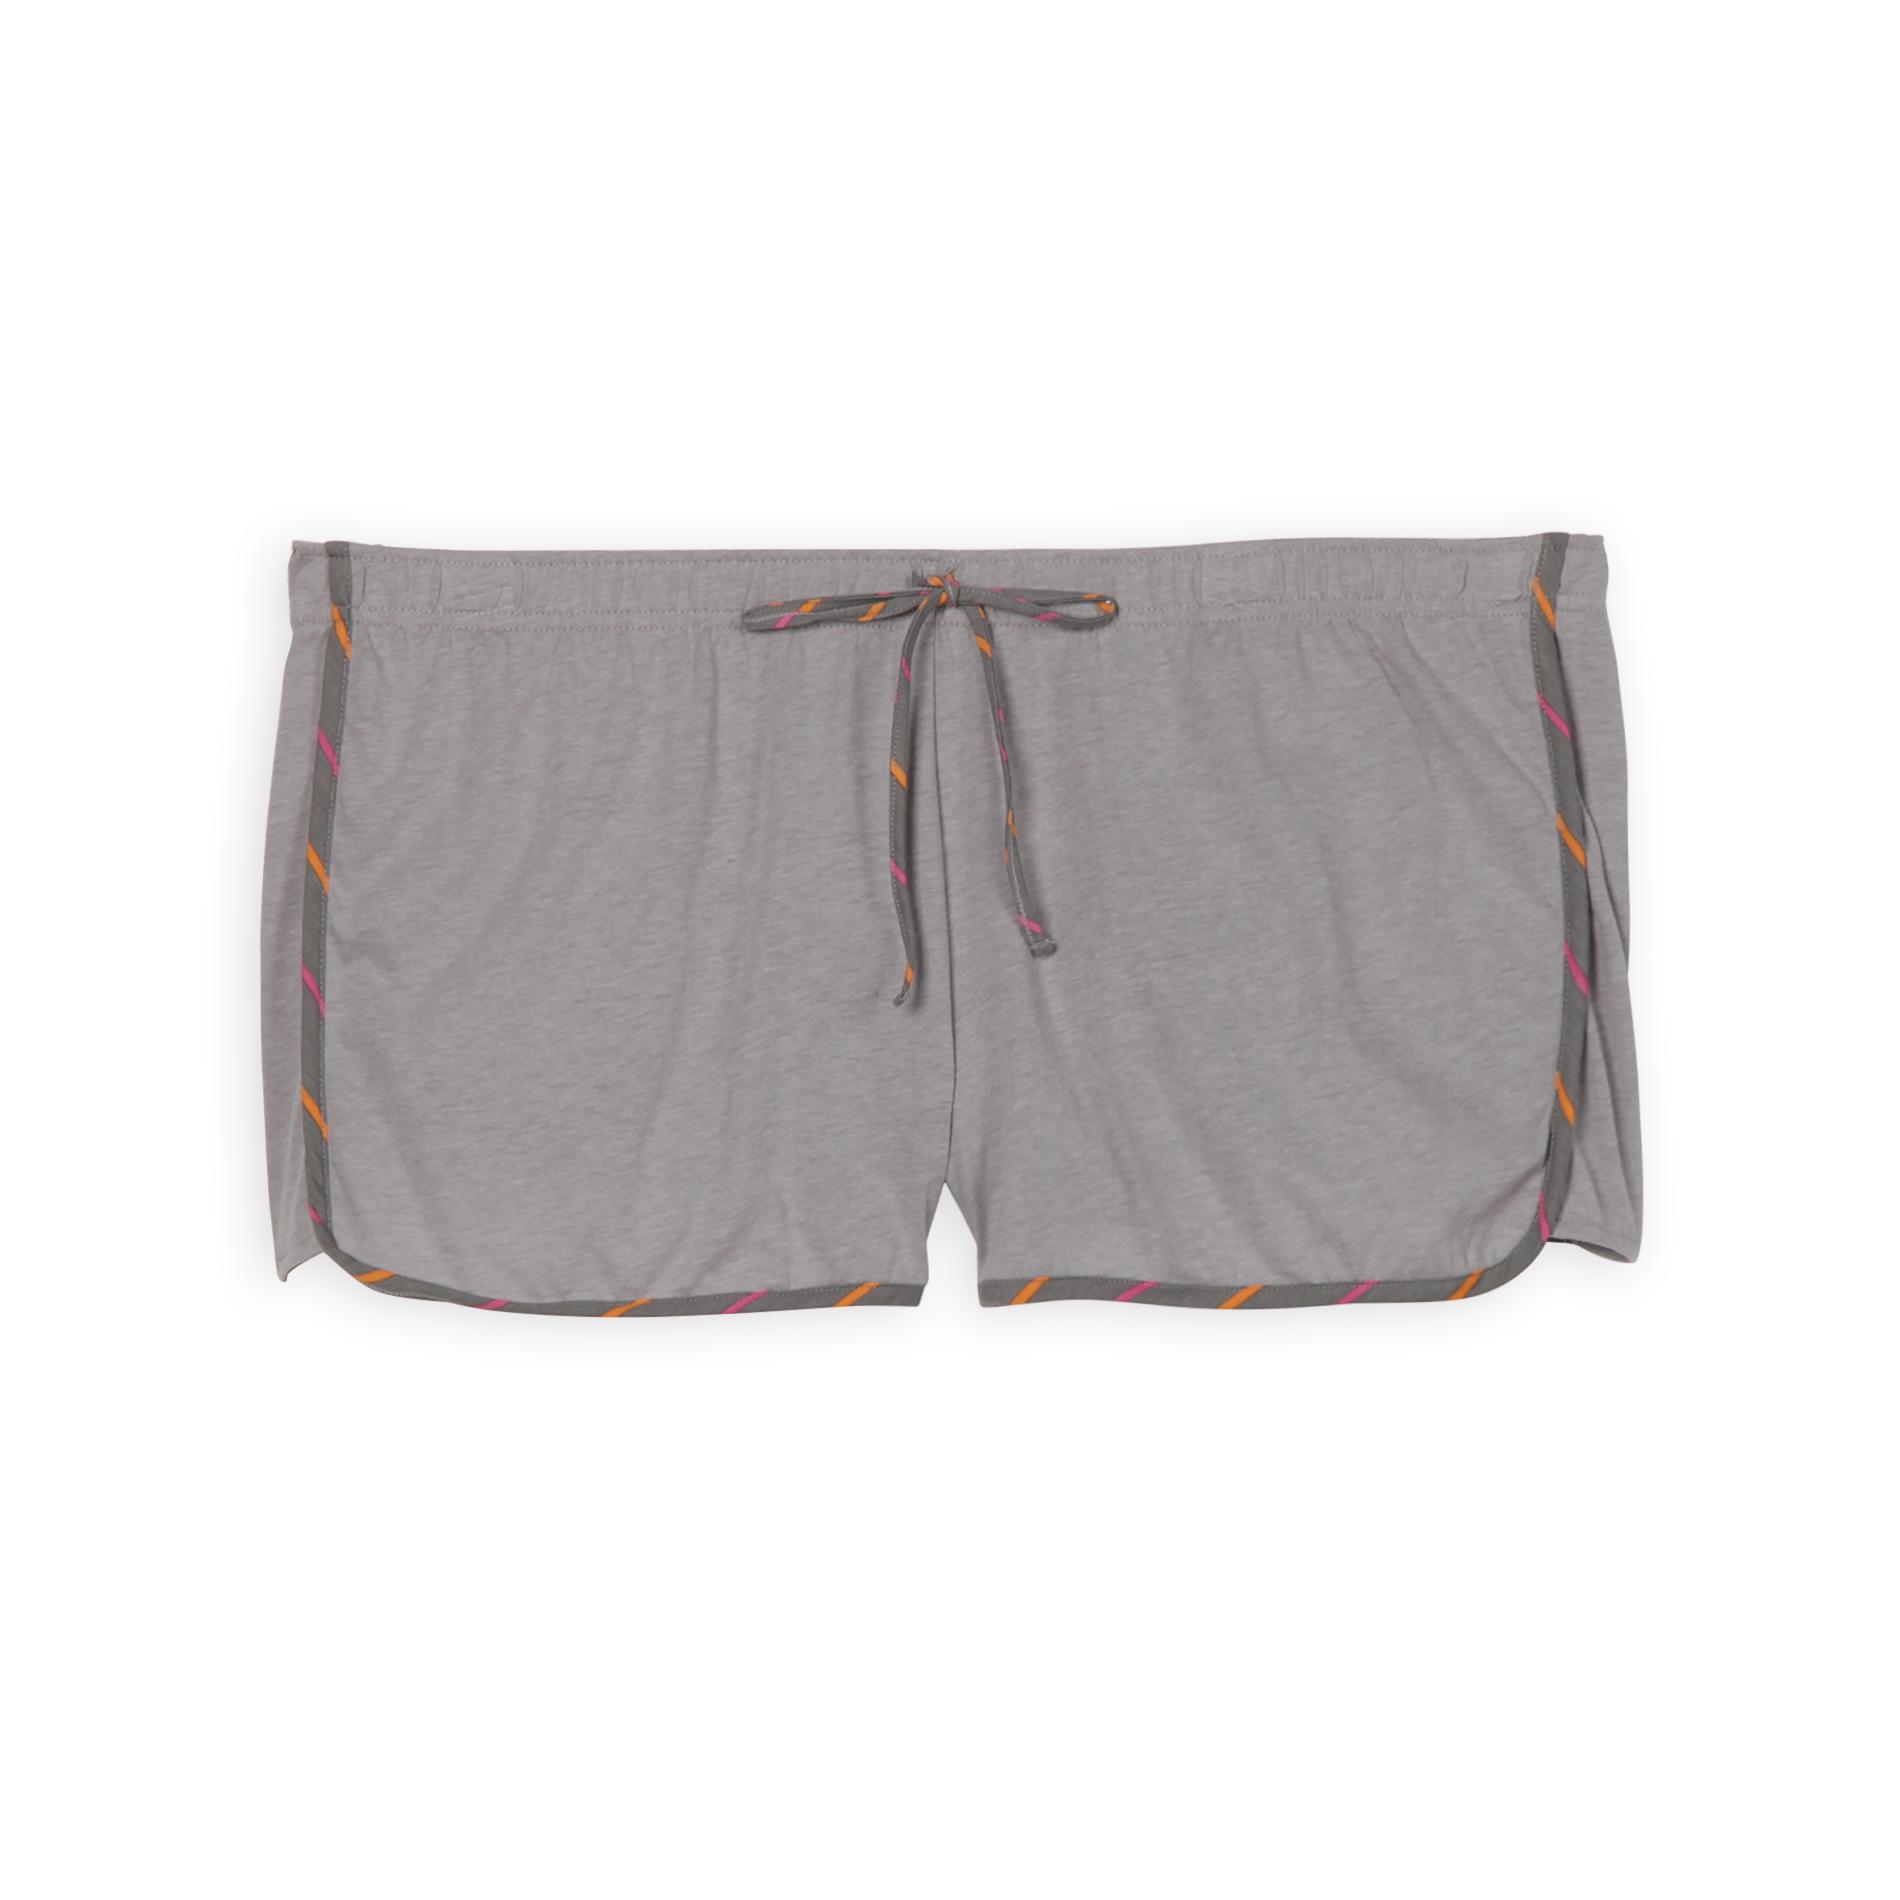 Joe Boxer Knit Dolphin Shorts - Striped Trim